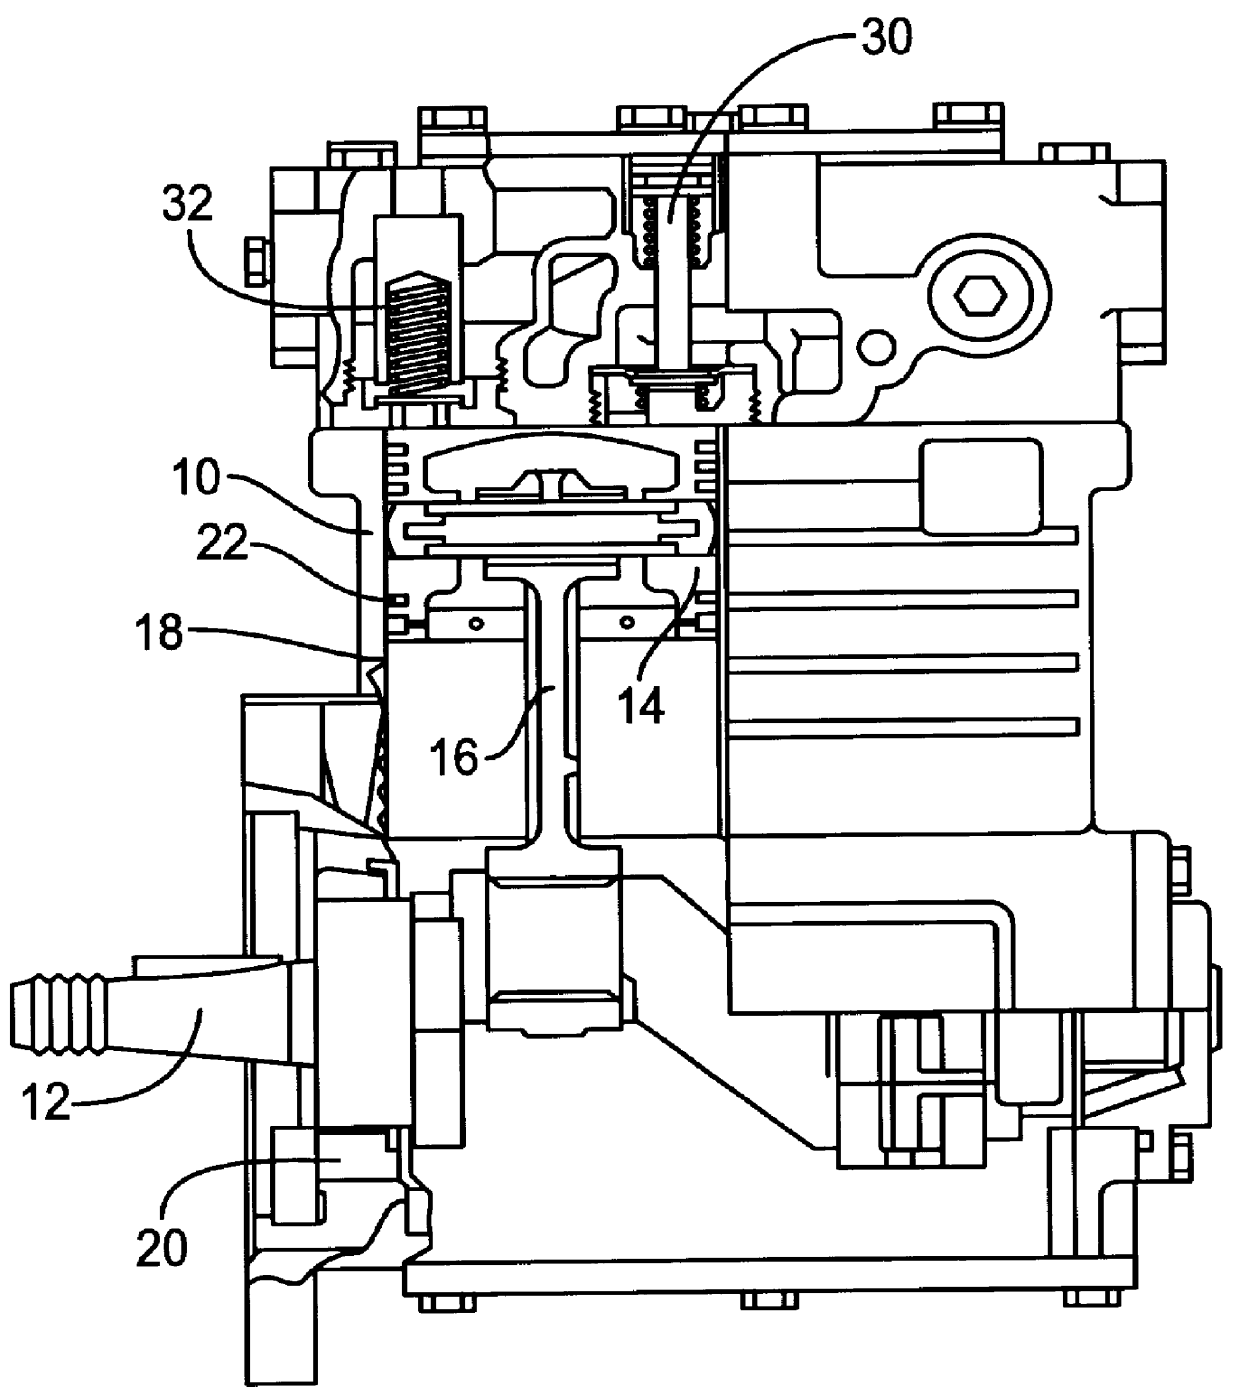 Oil-less/oil-free air brake compressor with a dual piston arrangement